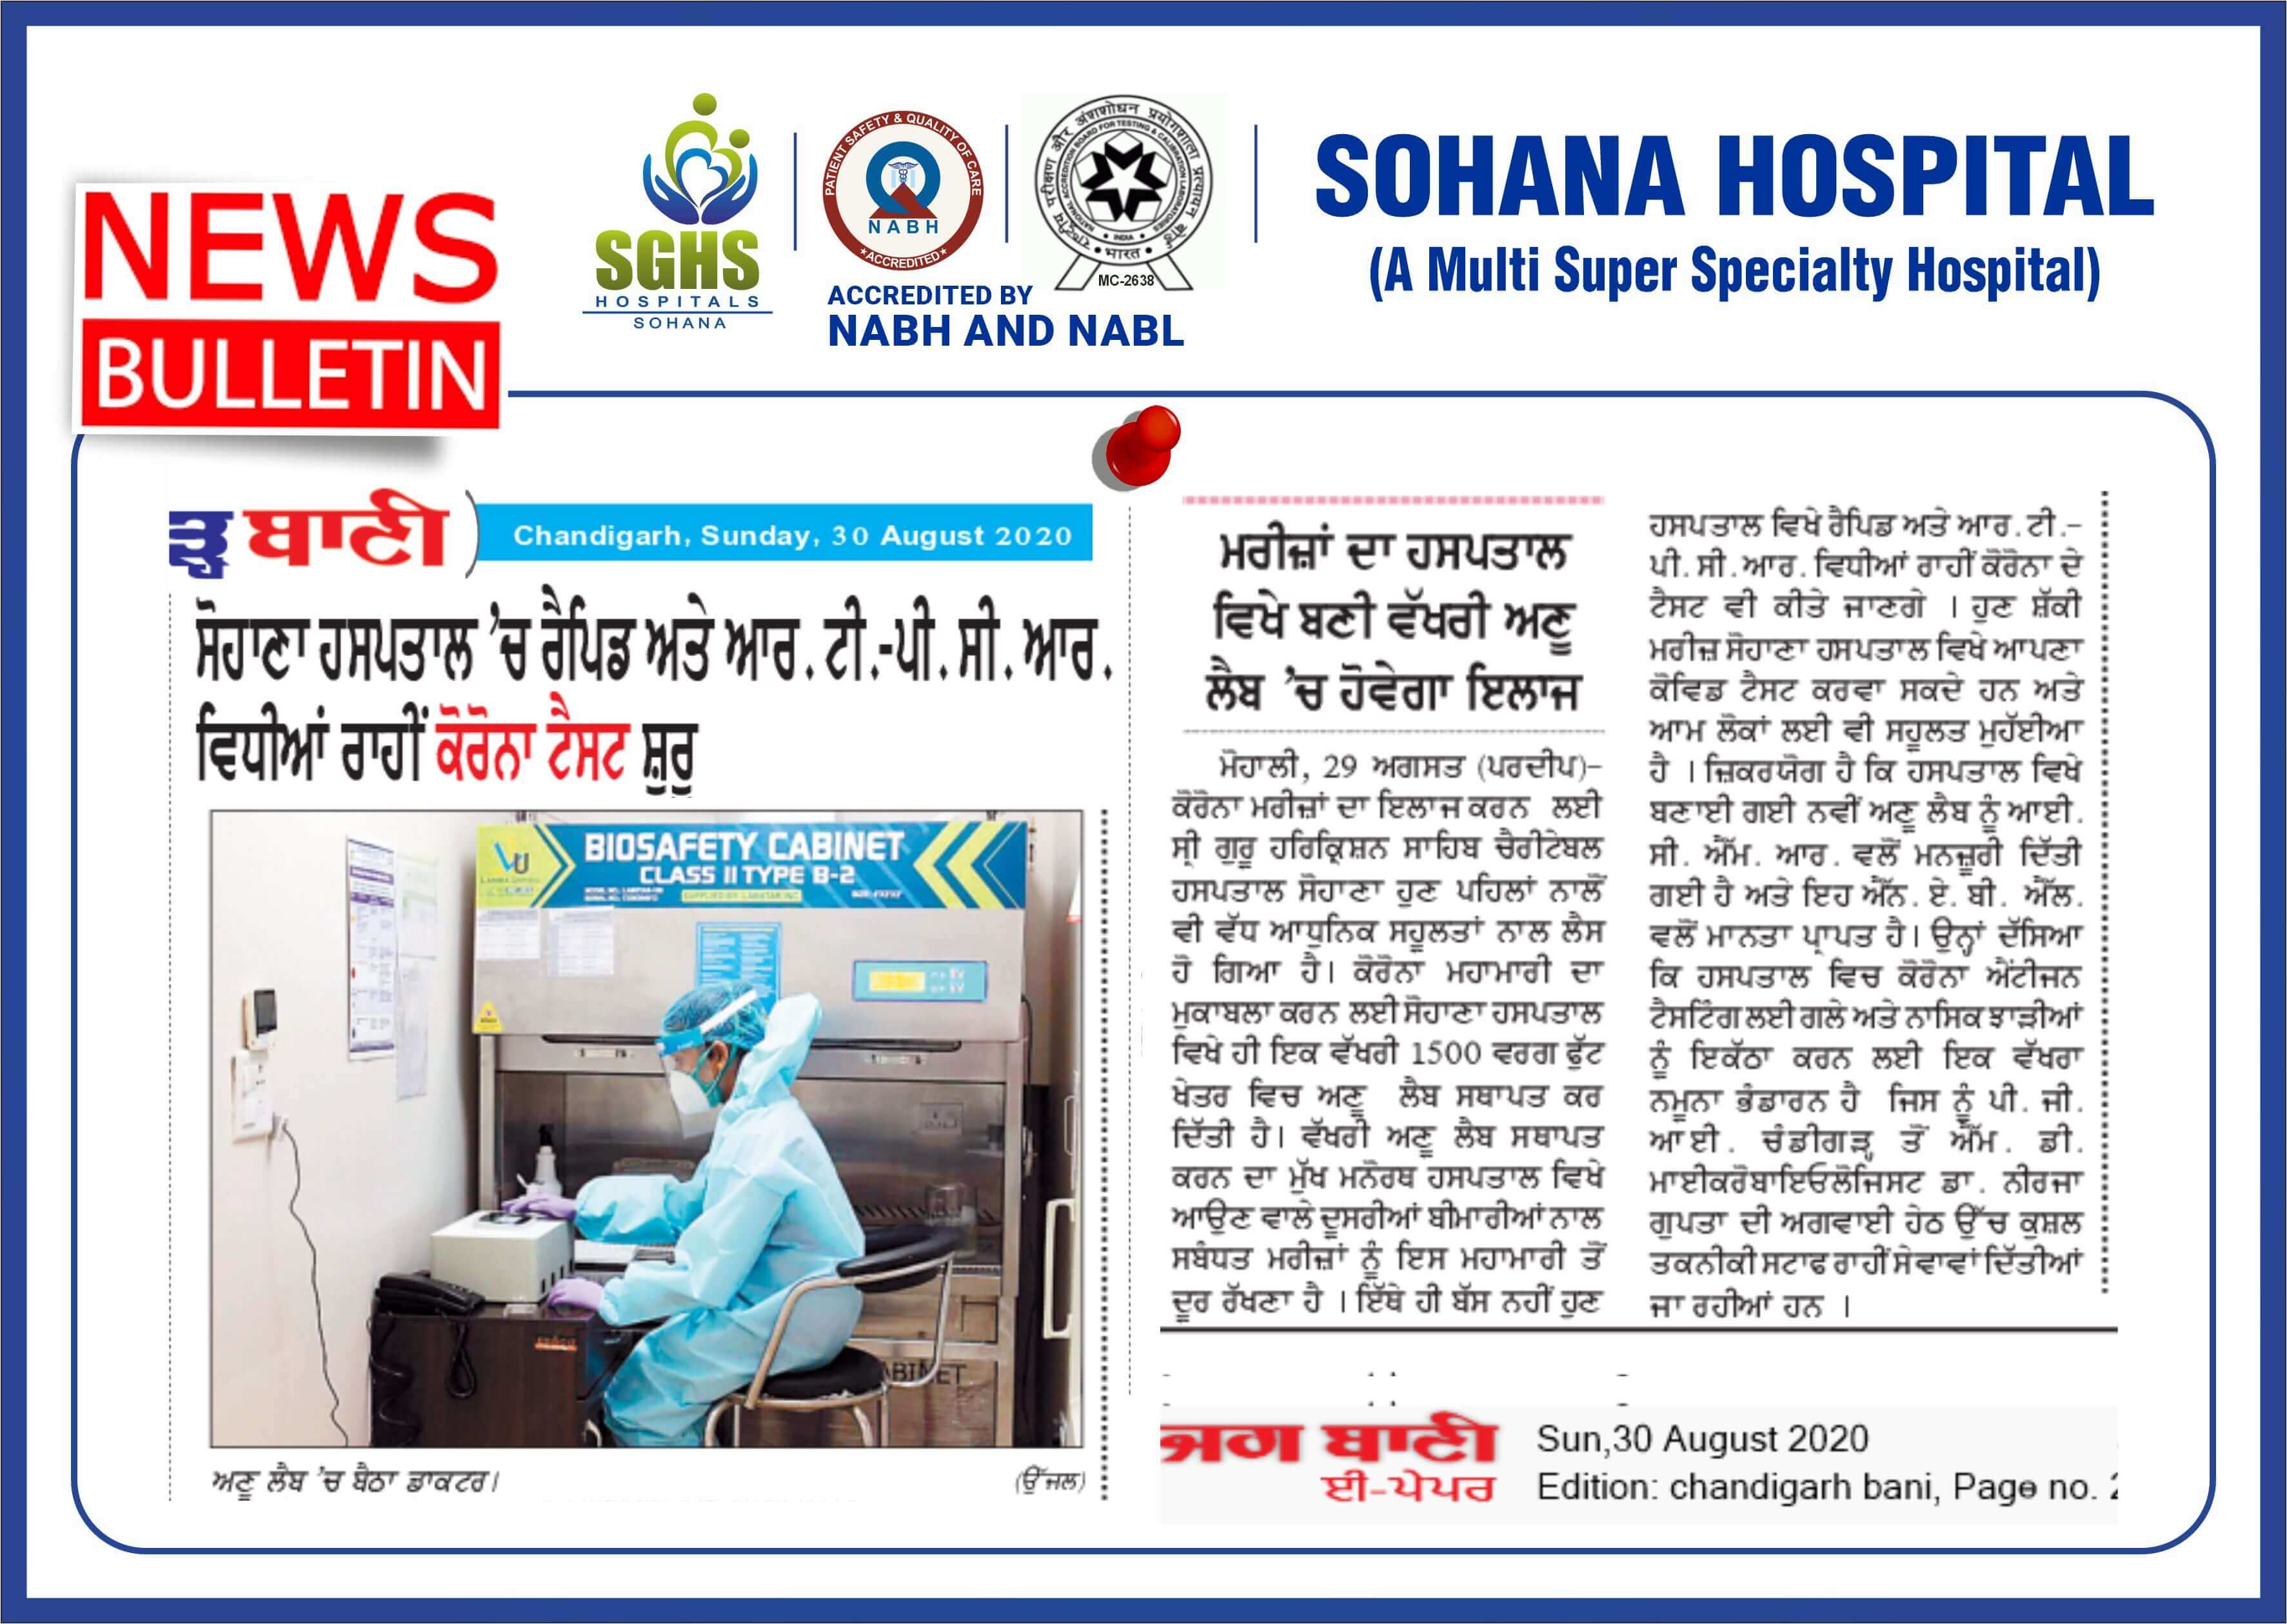 Sohana Hospital Image